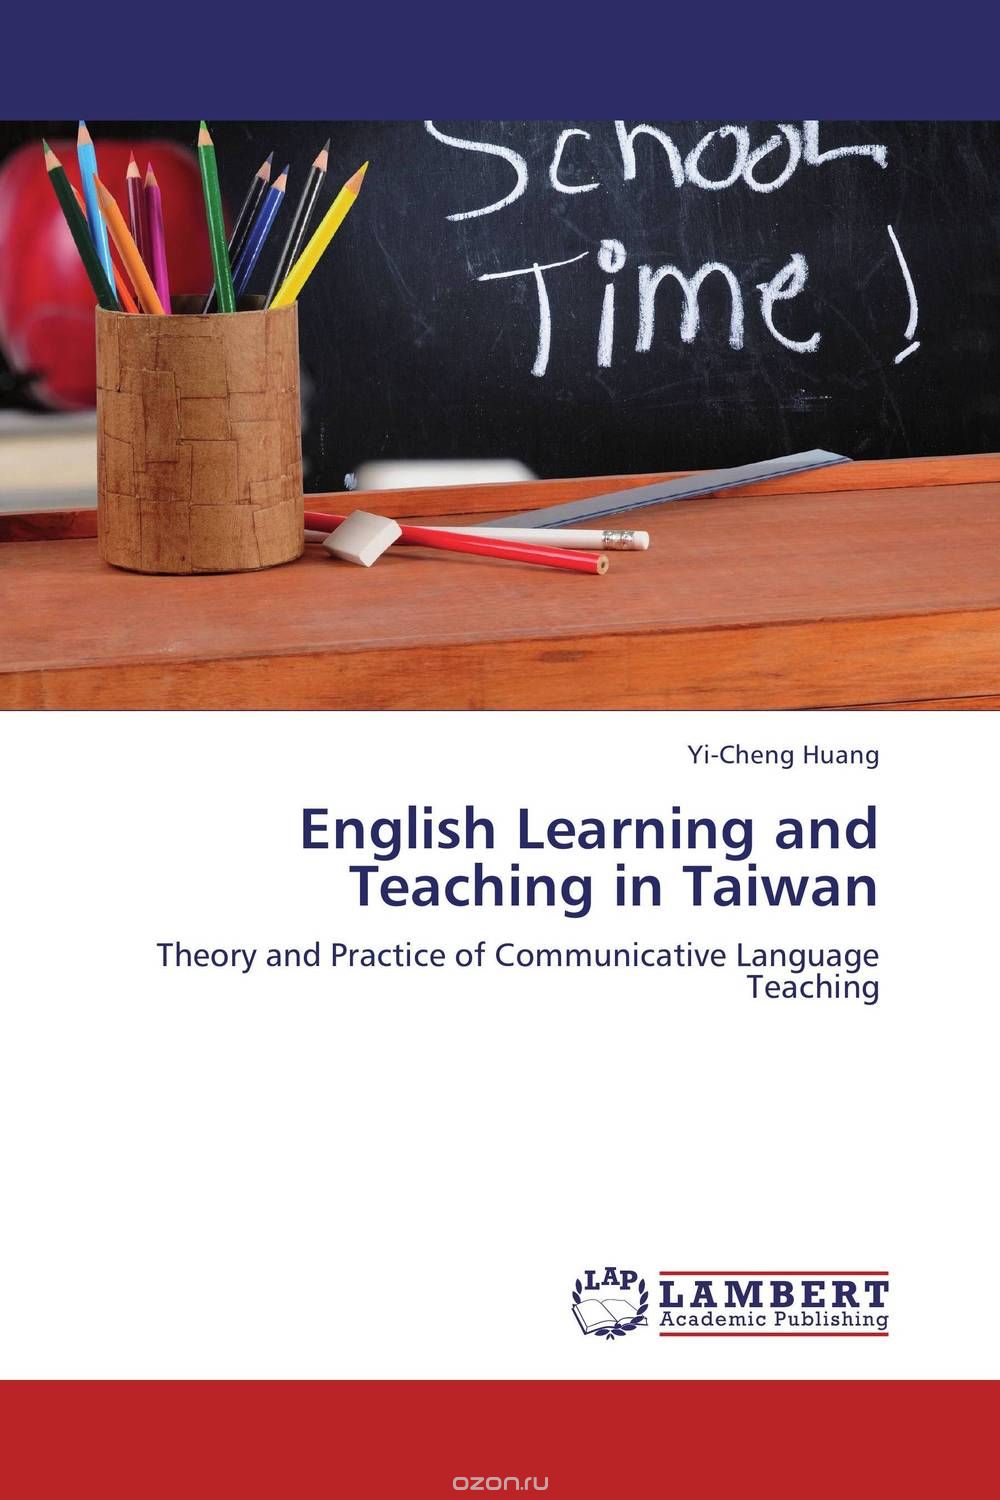 English Learning and Teaching in Taiwan